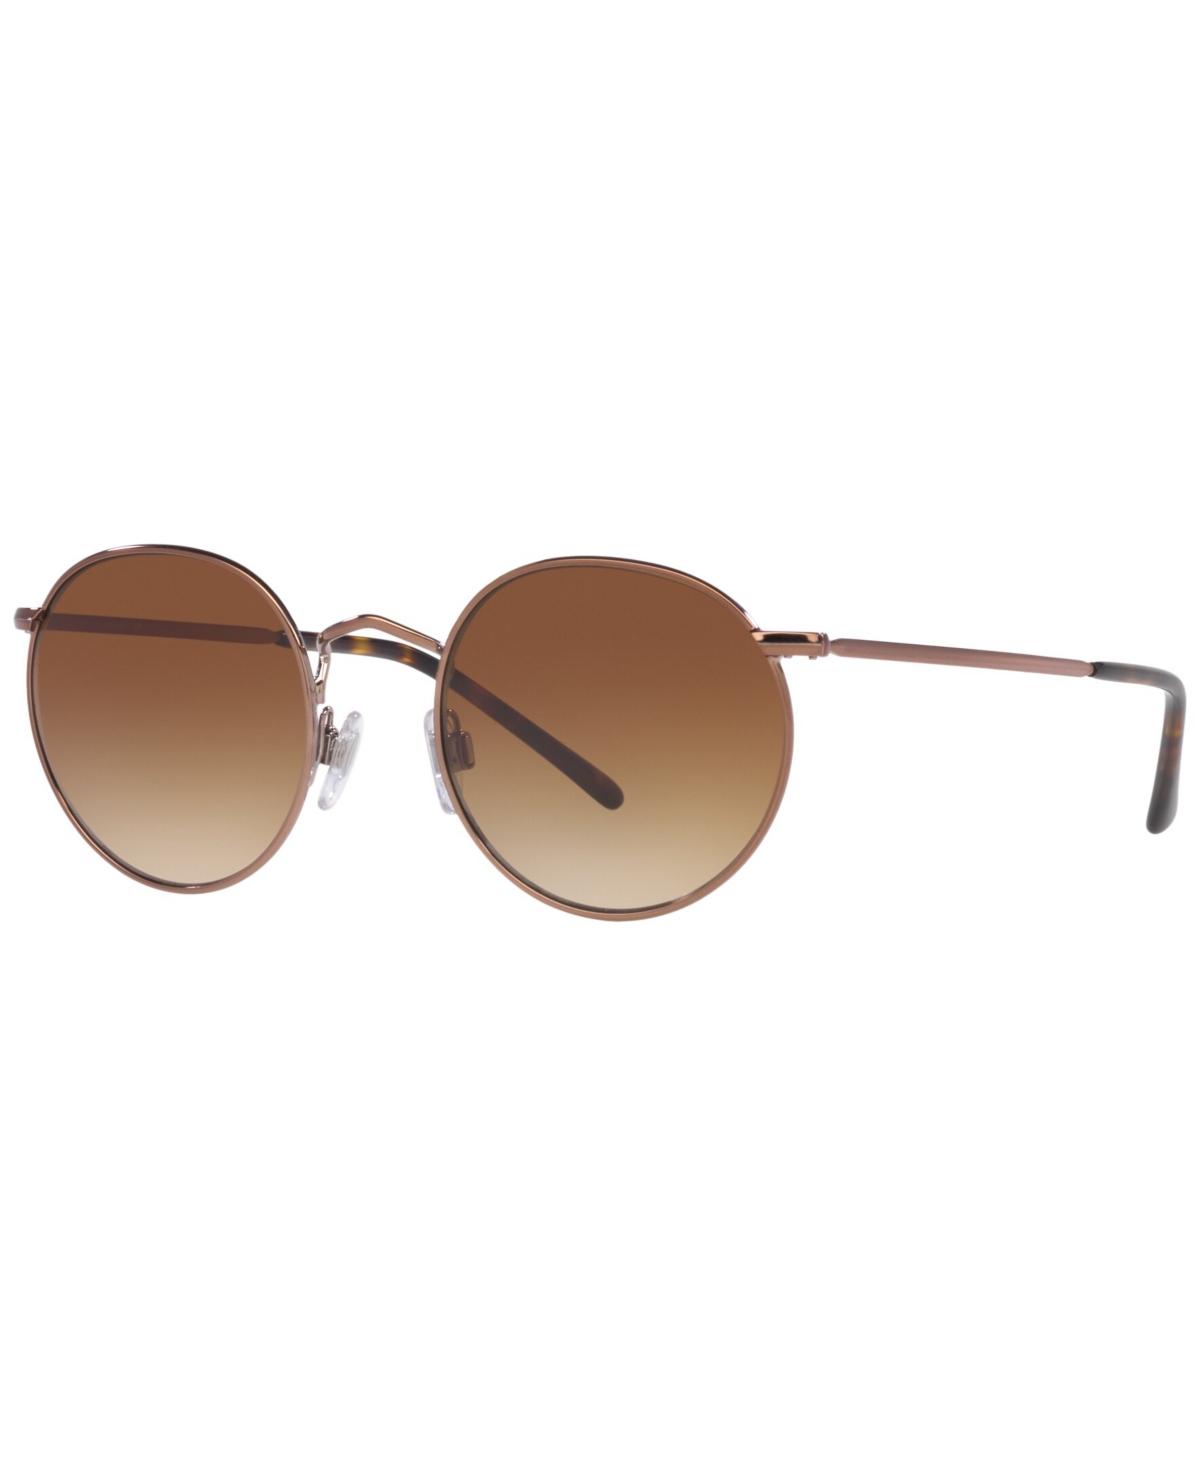 Unisex Sunglasses, HU100949-y - Shiny Copper